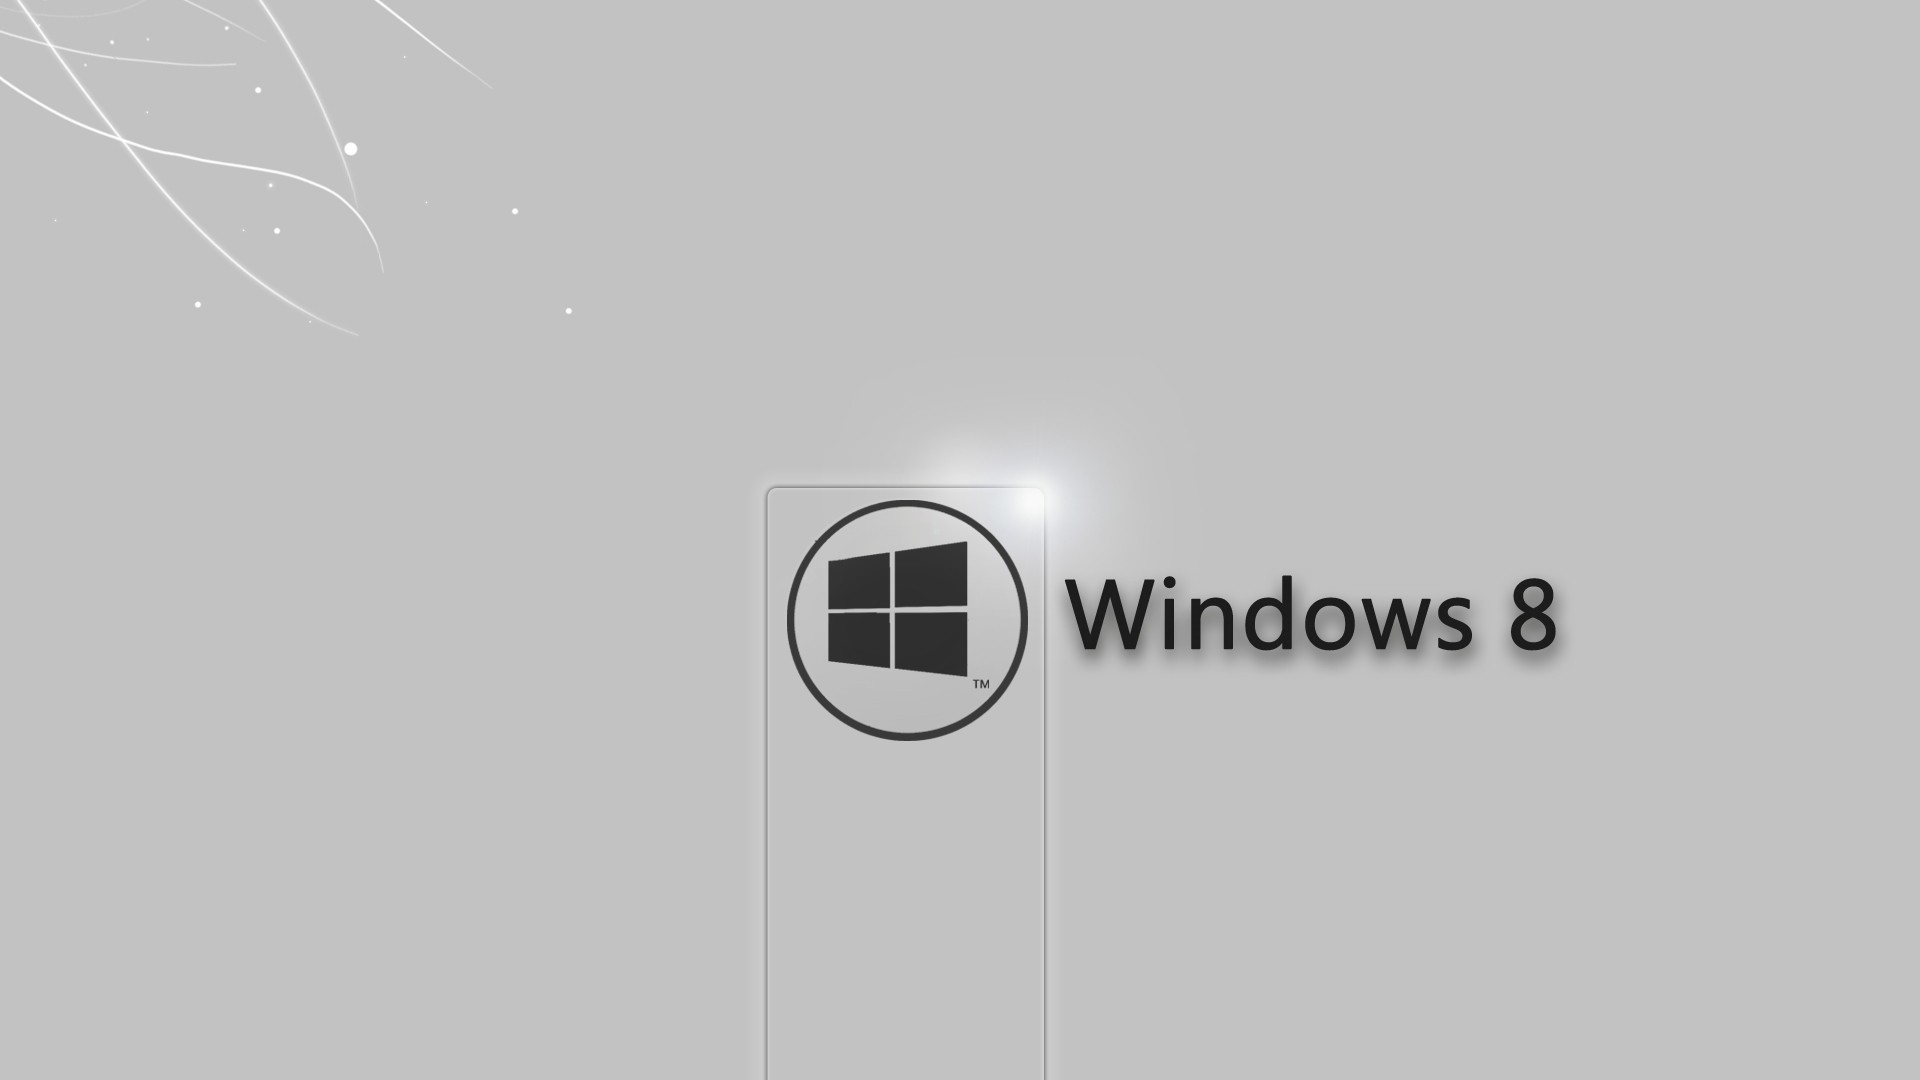 1920x1080 Download now full hd wallpaper windows 8 logo background ...